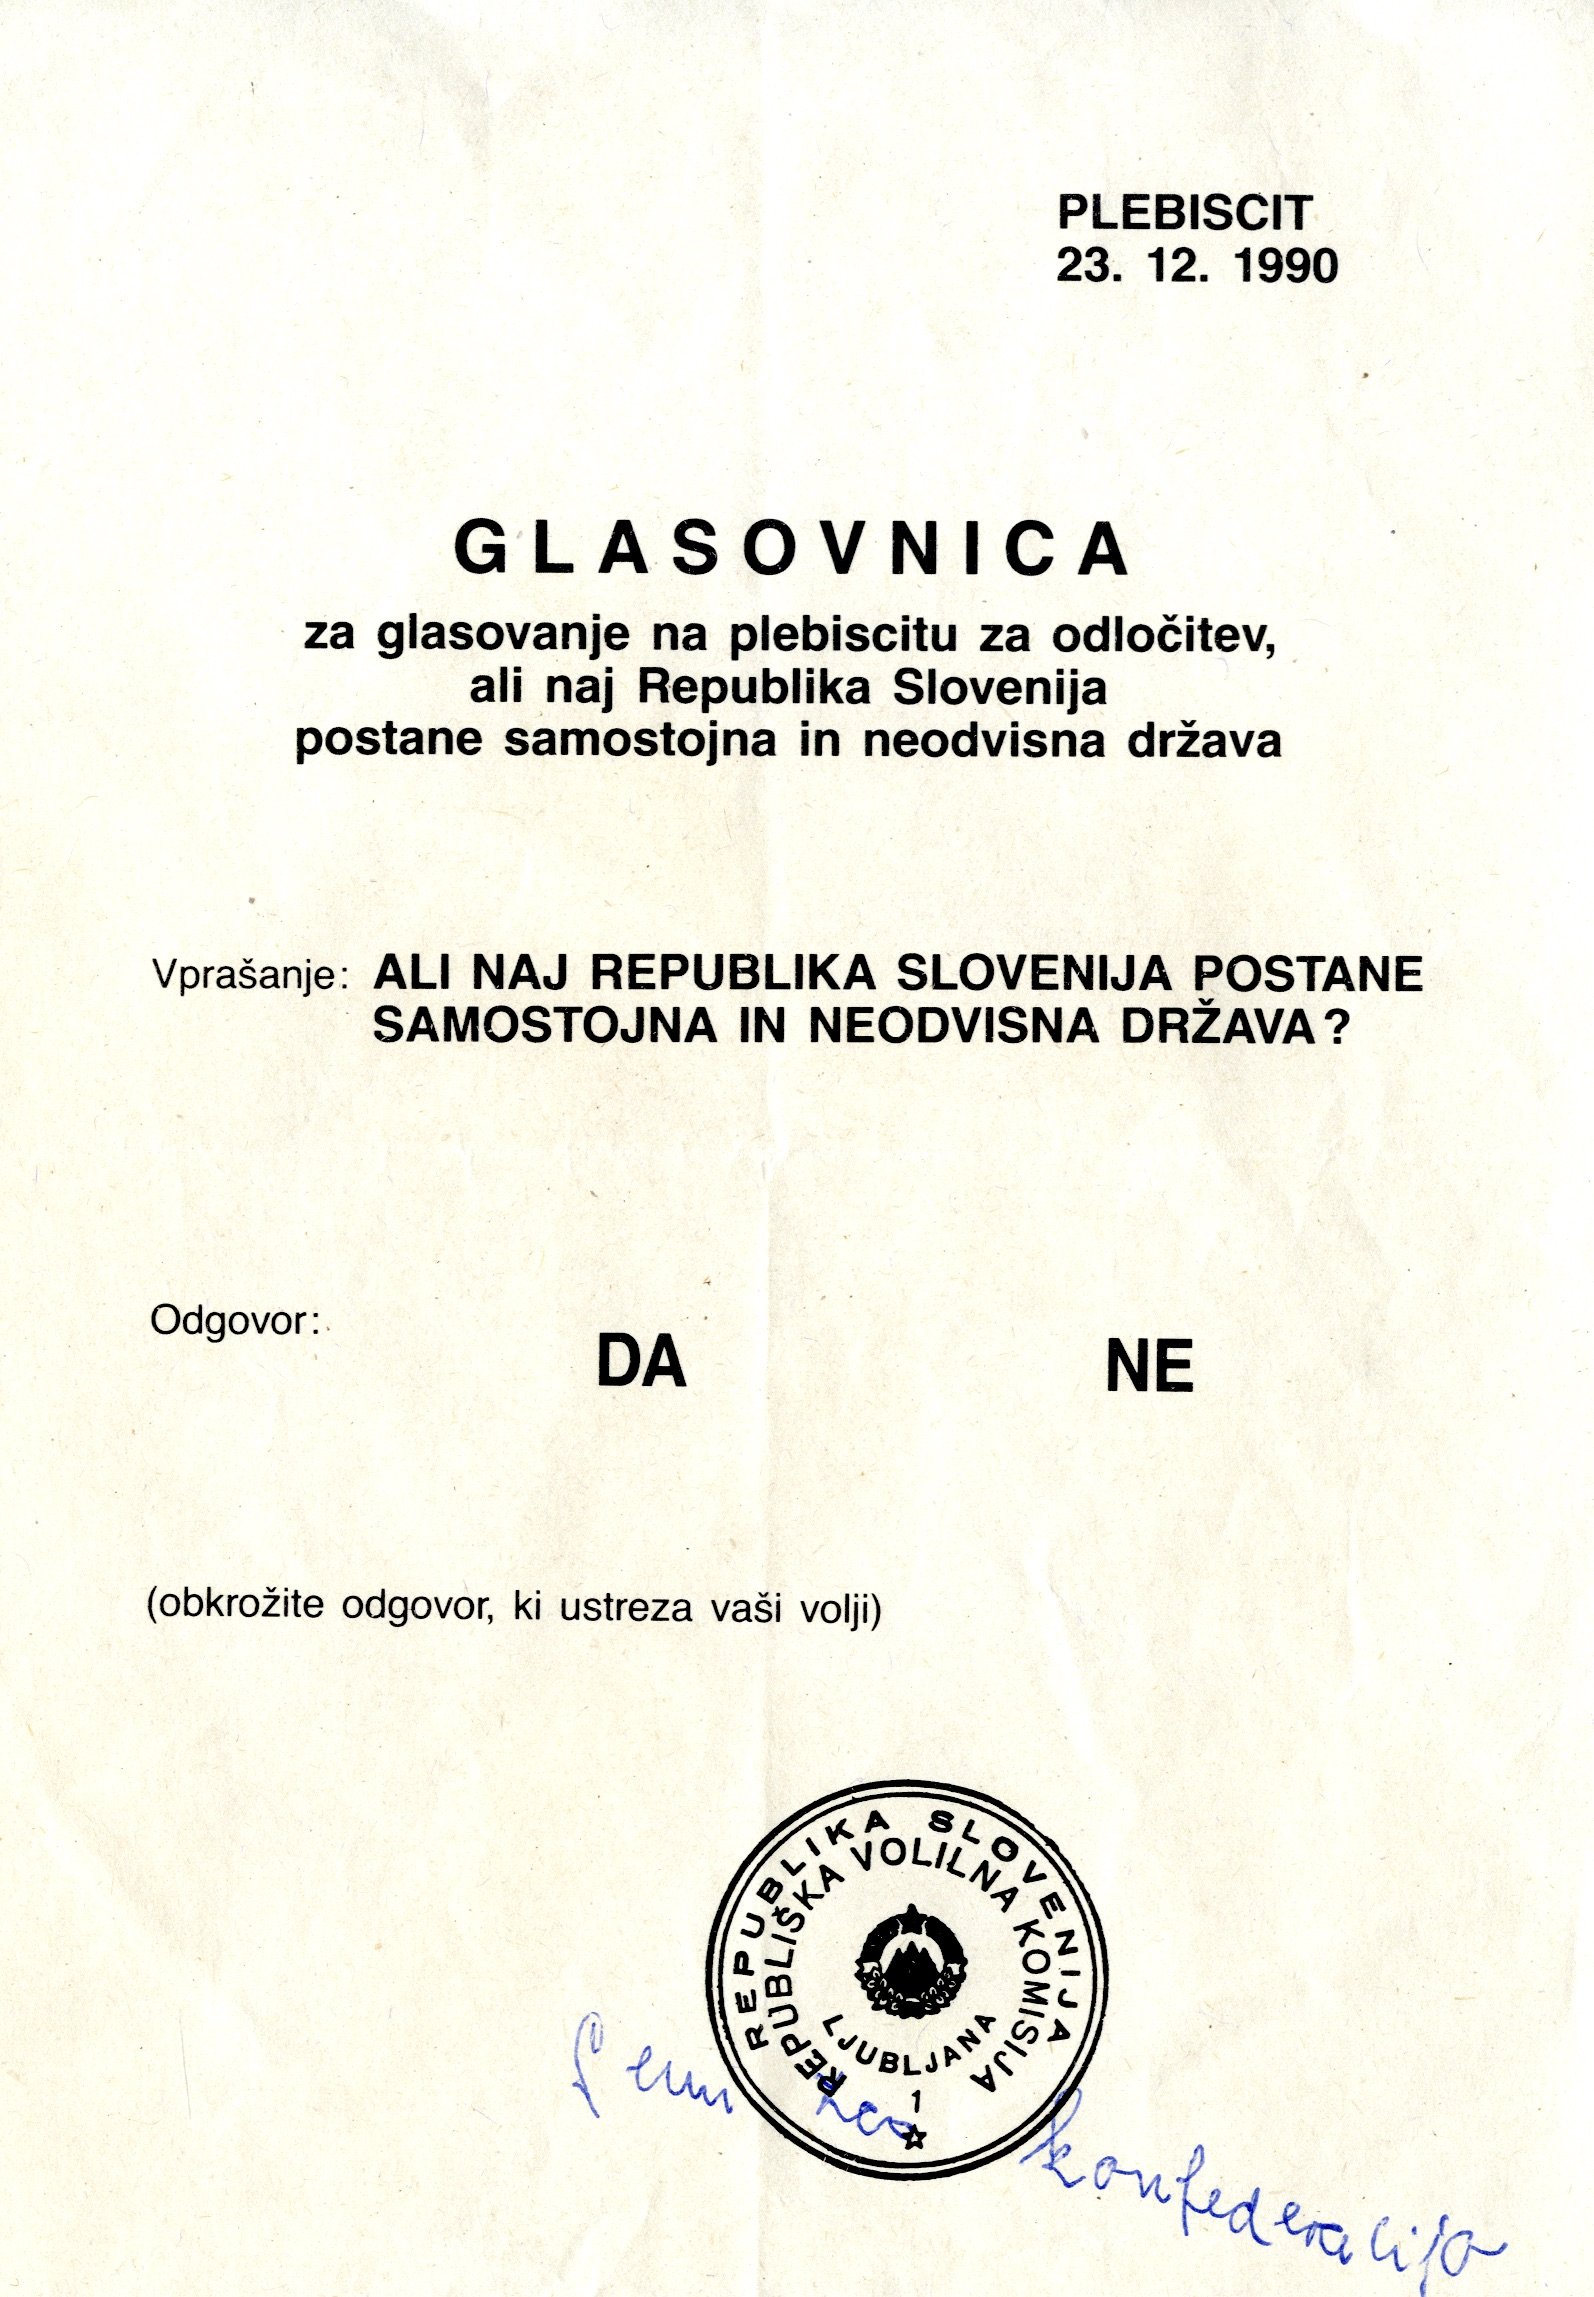 invalid votes from the Arhiv Republike Slovenije, Archives of the Republic of Slovenia